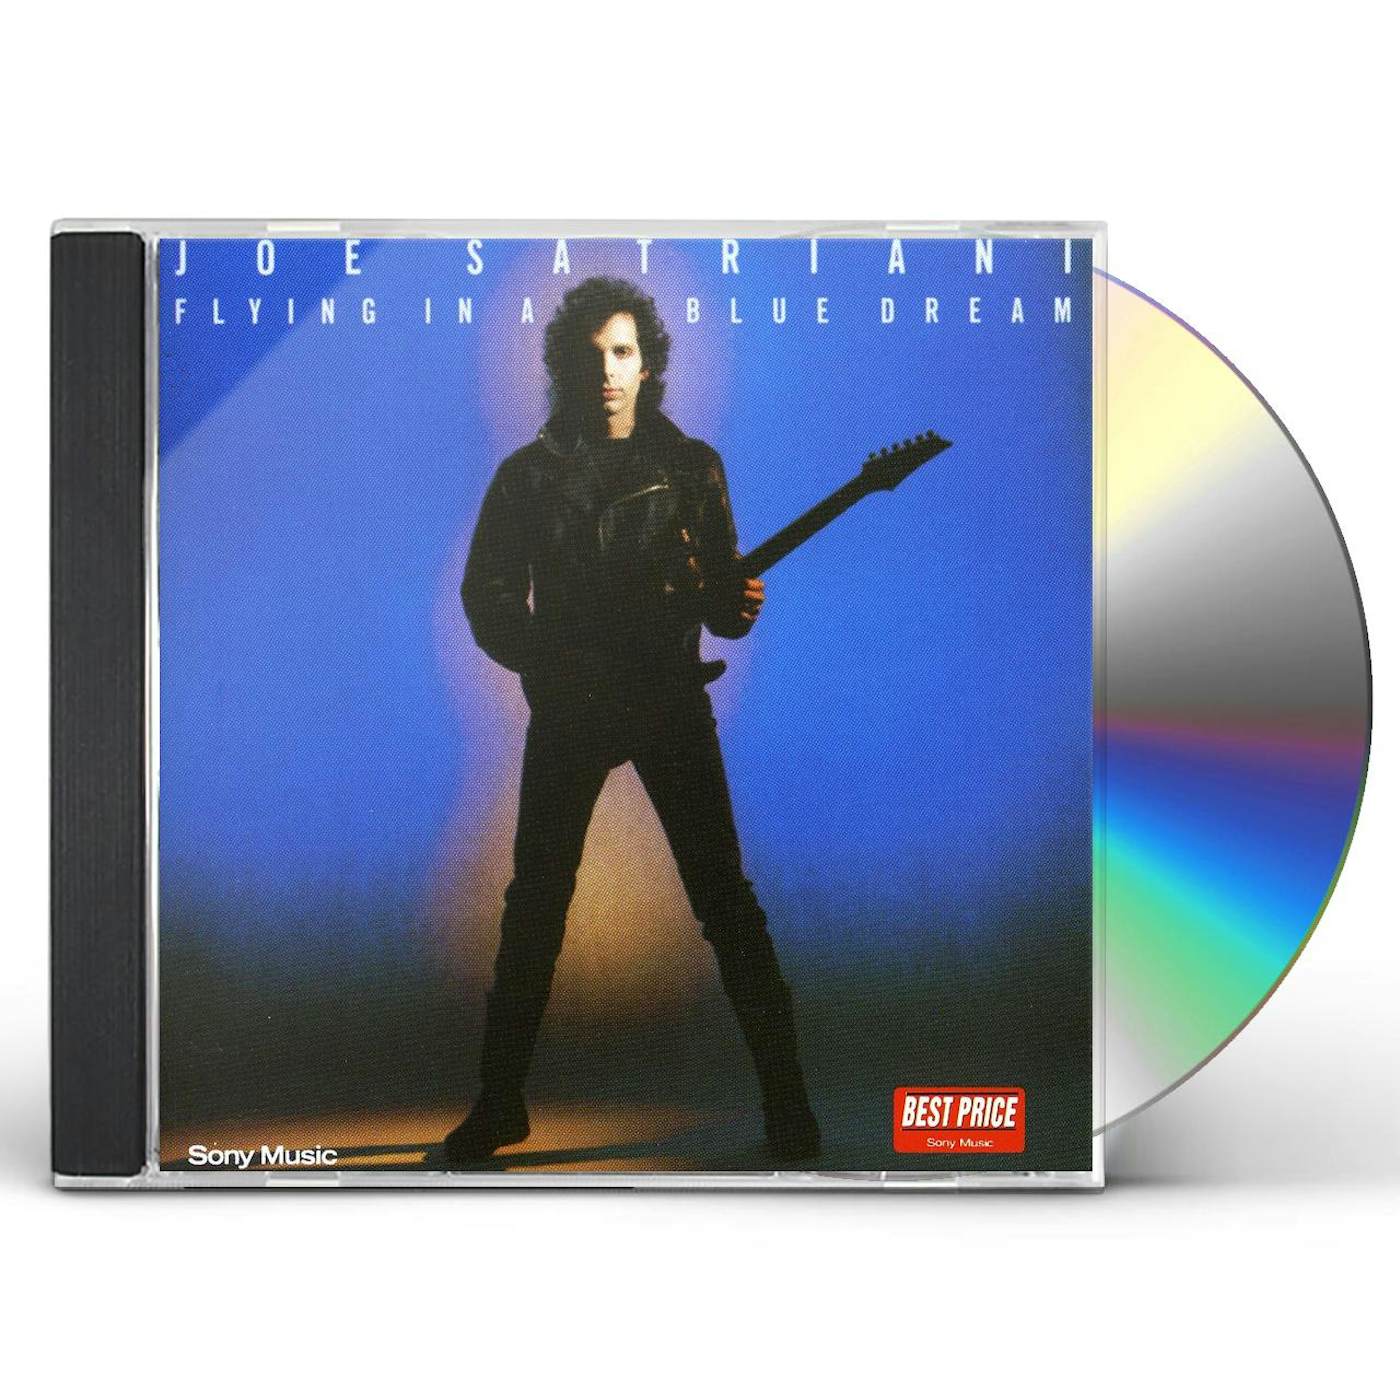 Joe Satriani FLYING IN THE BLUE DREAM CD